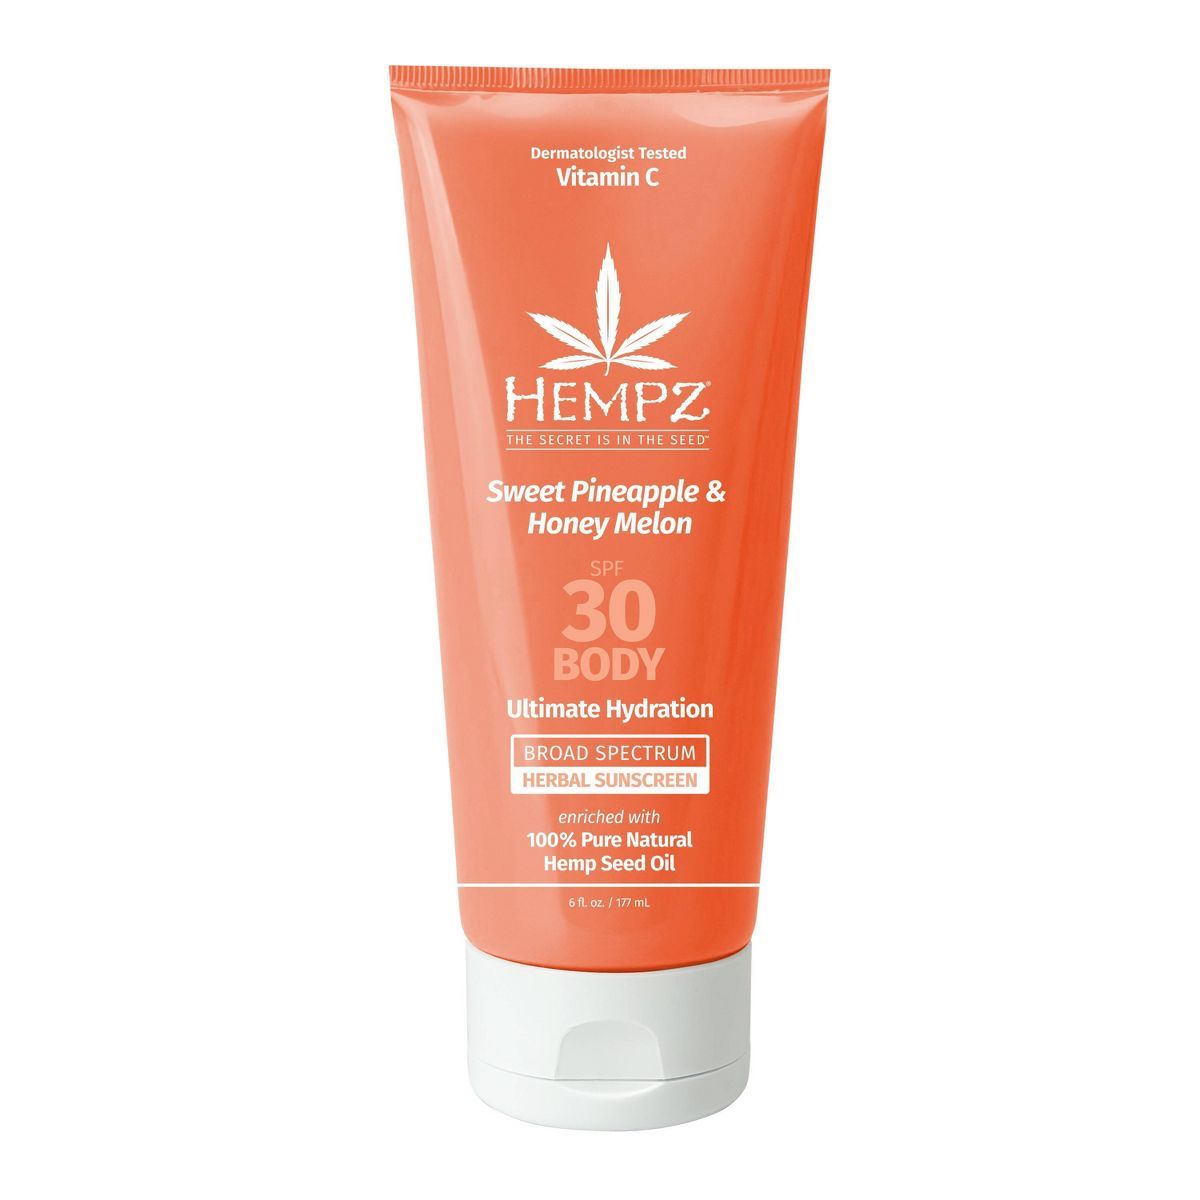 Hempz Sweet Pineapple & Honey Melon Herbal Body Sunscreen - SPF 30 - 6oz | Target